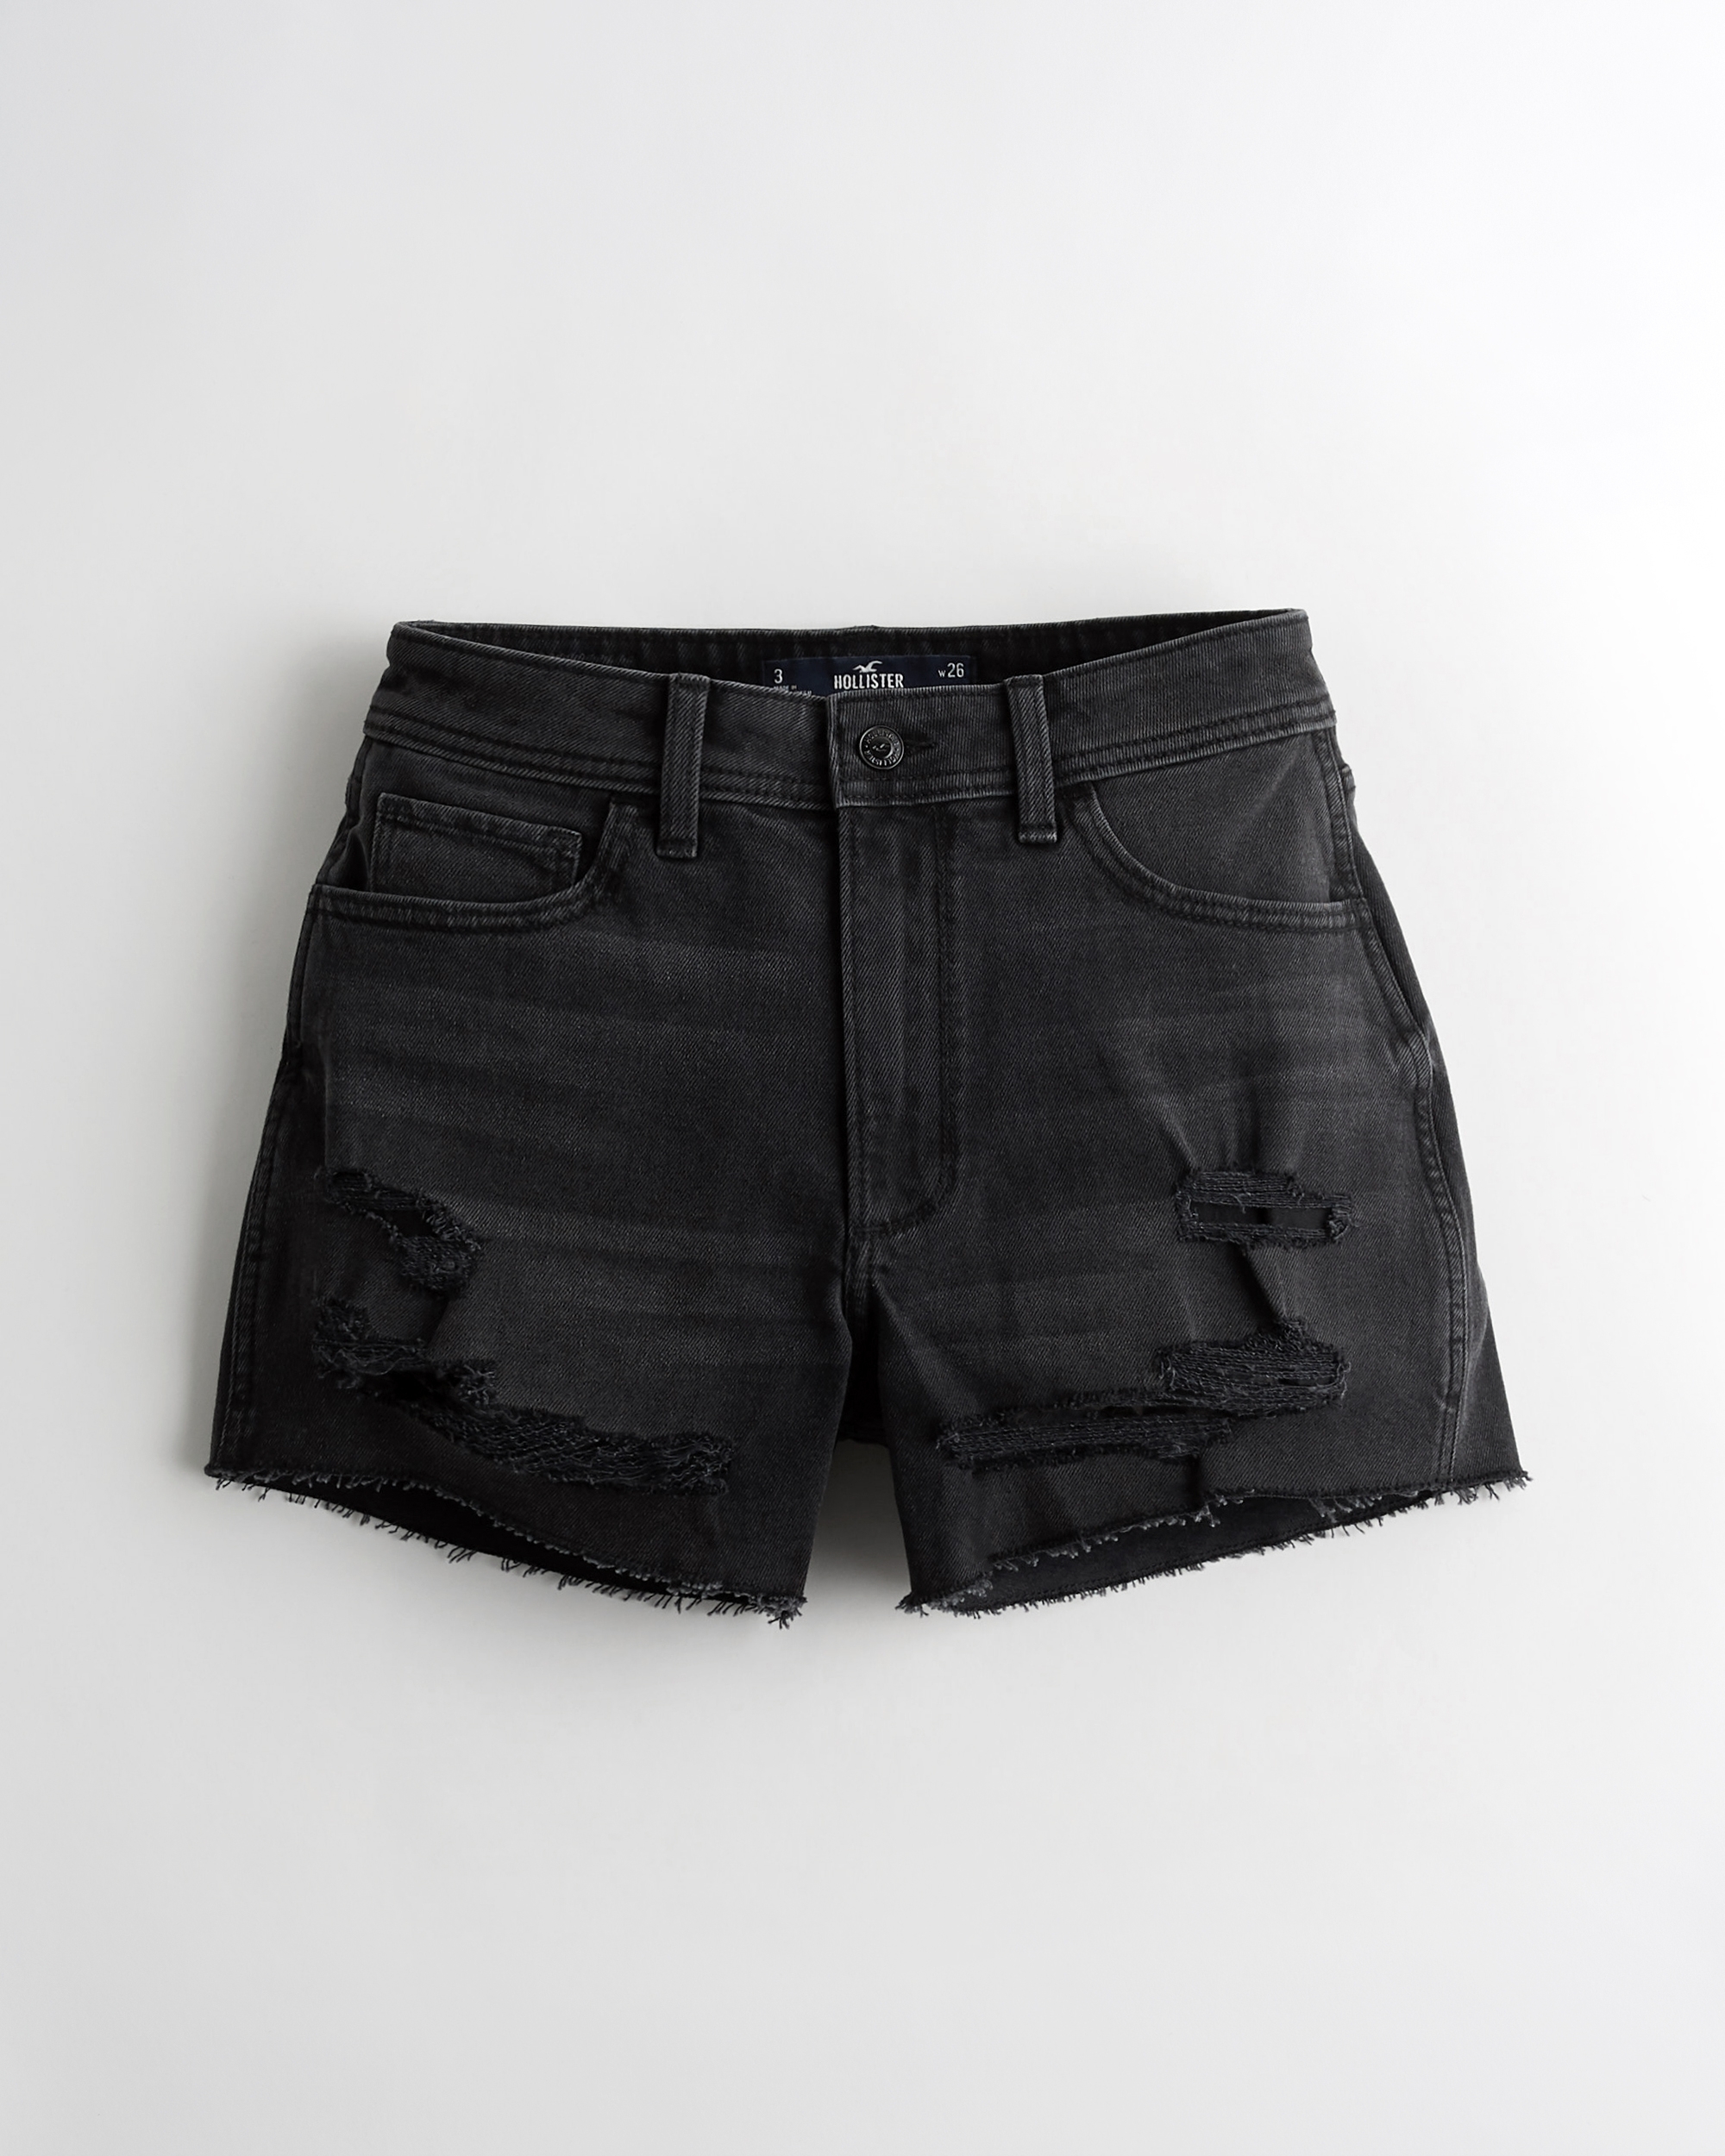 Jean Shorts and Denim Shorts 